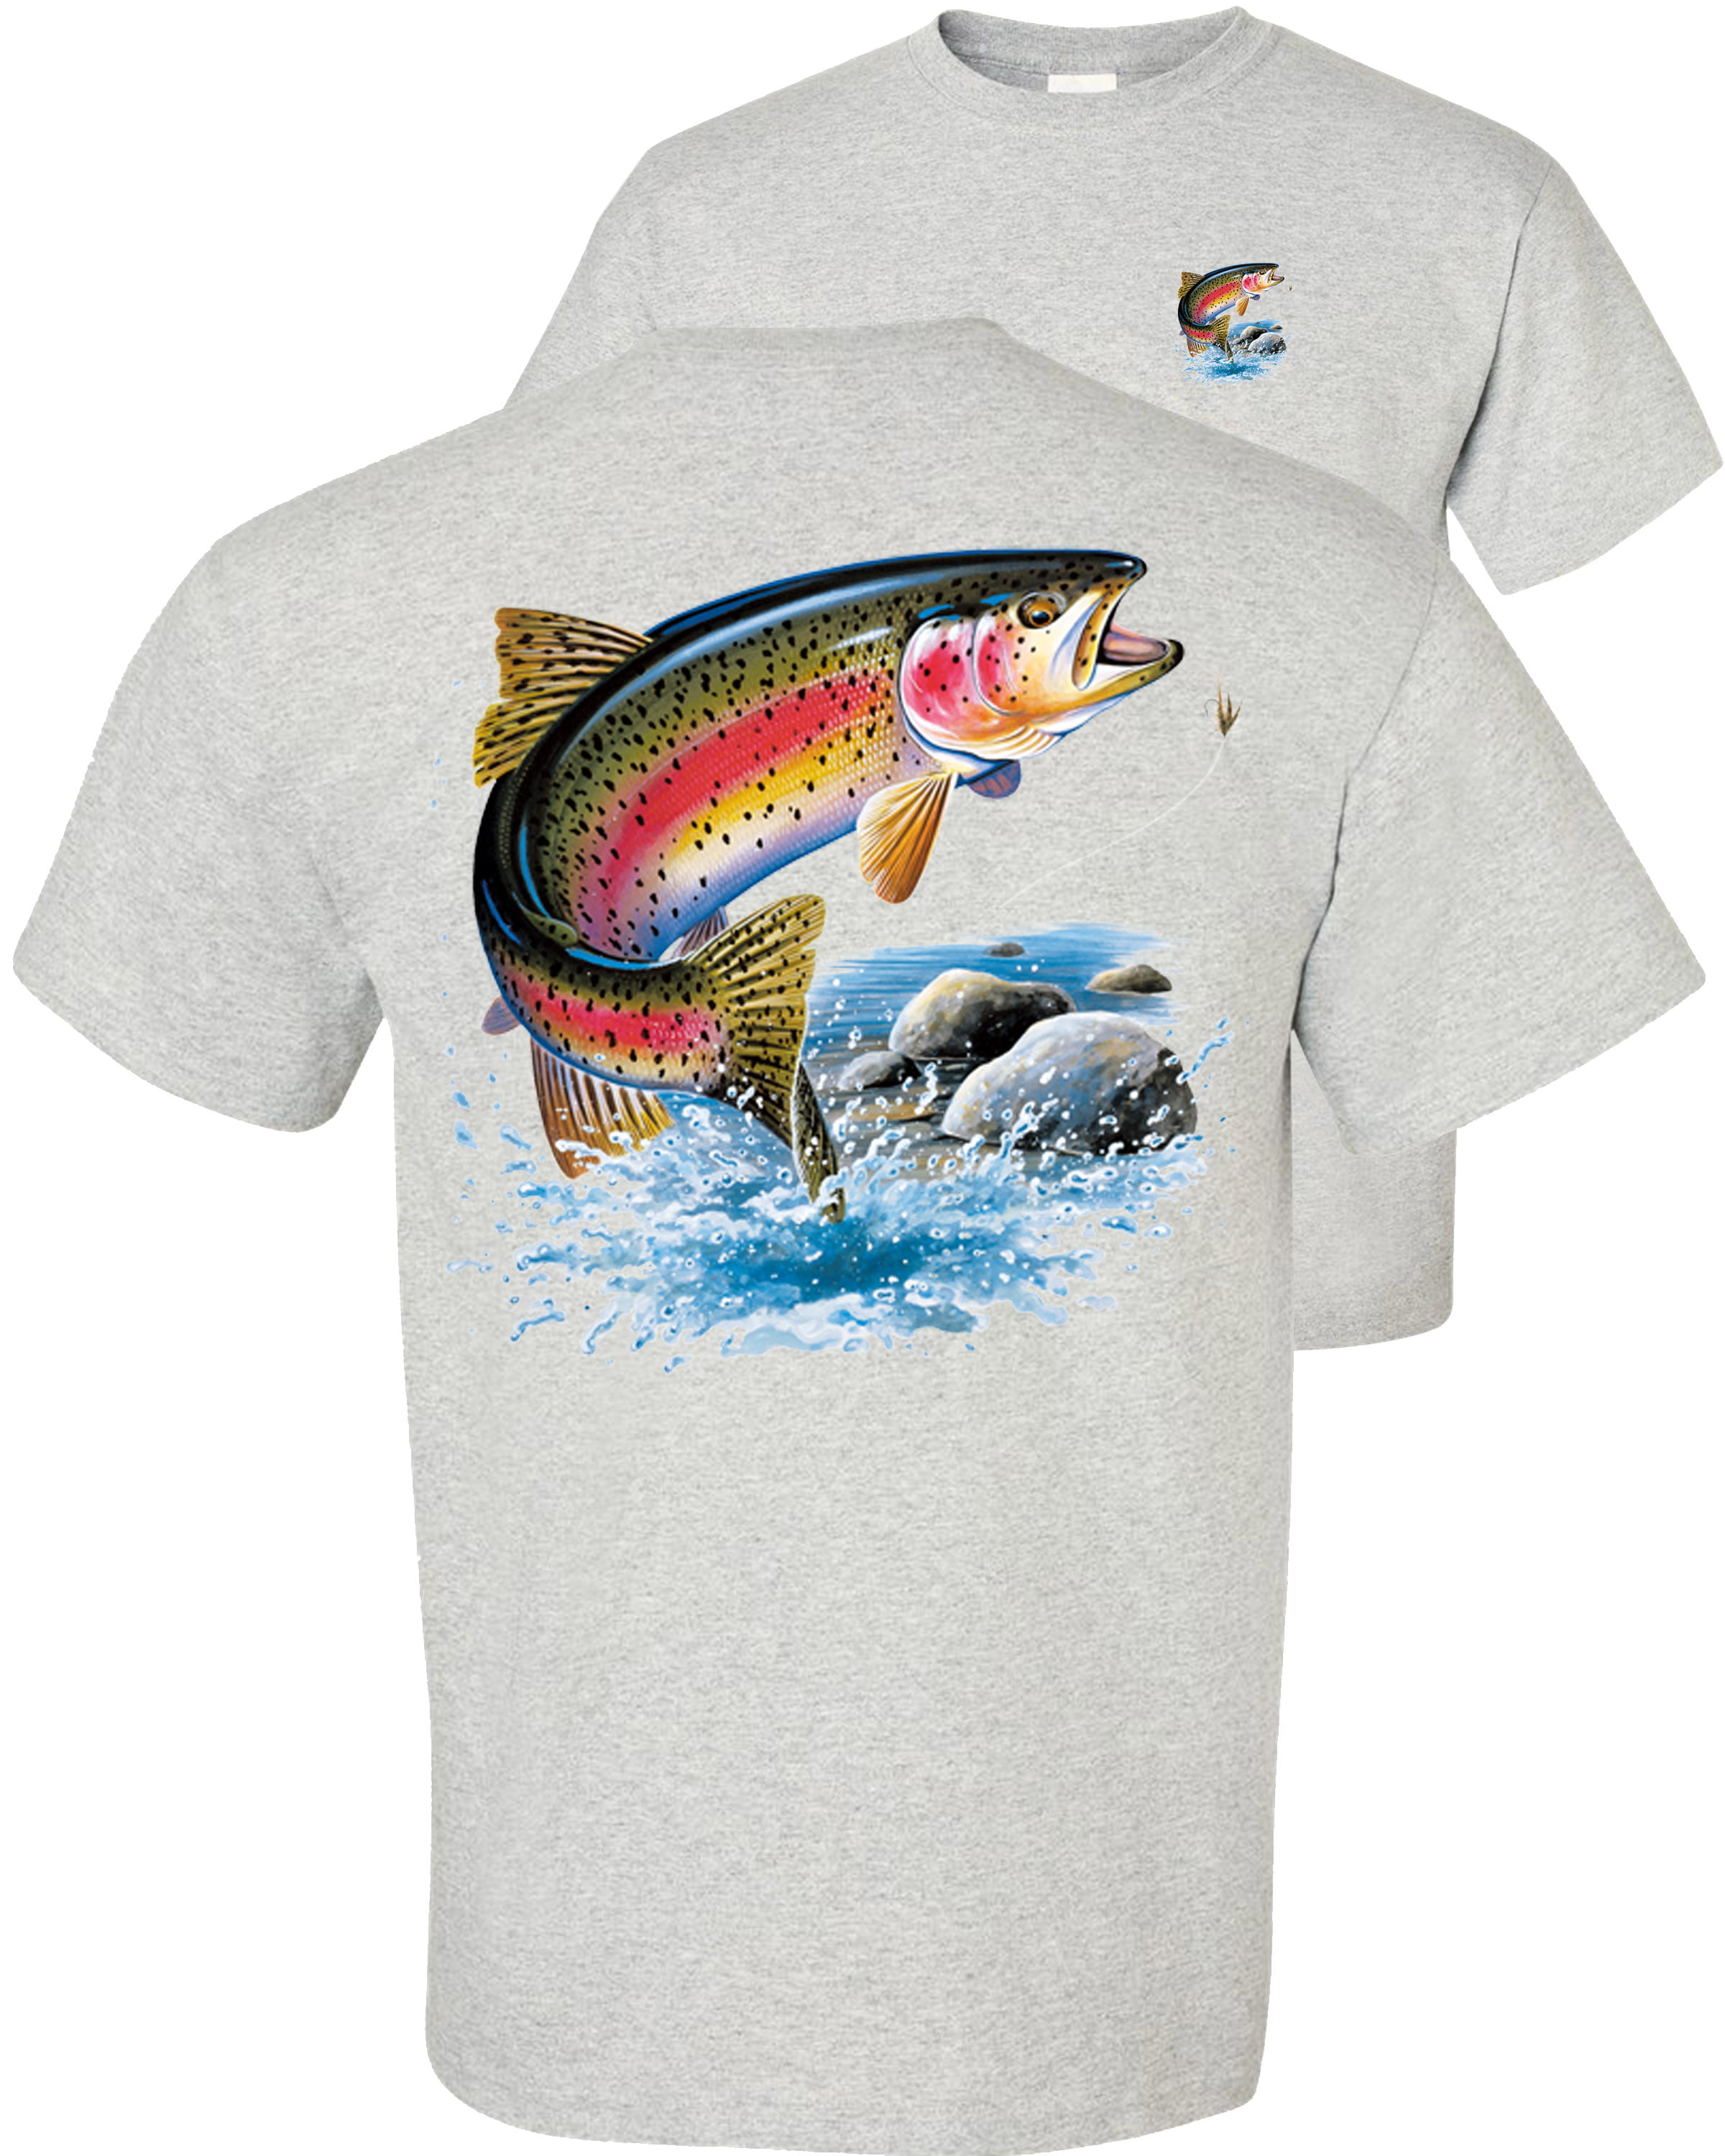 Fair Game Rainbow Trout T-Shirt Fly Fishing Fisherman-Ice Grey-M, adult Unisex, Size: Medium, Gray